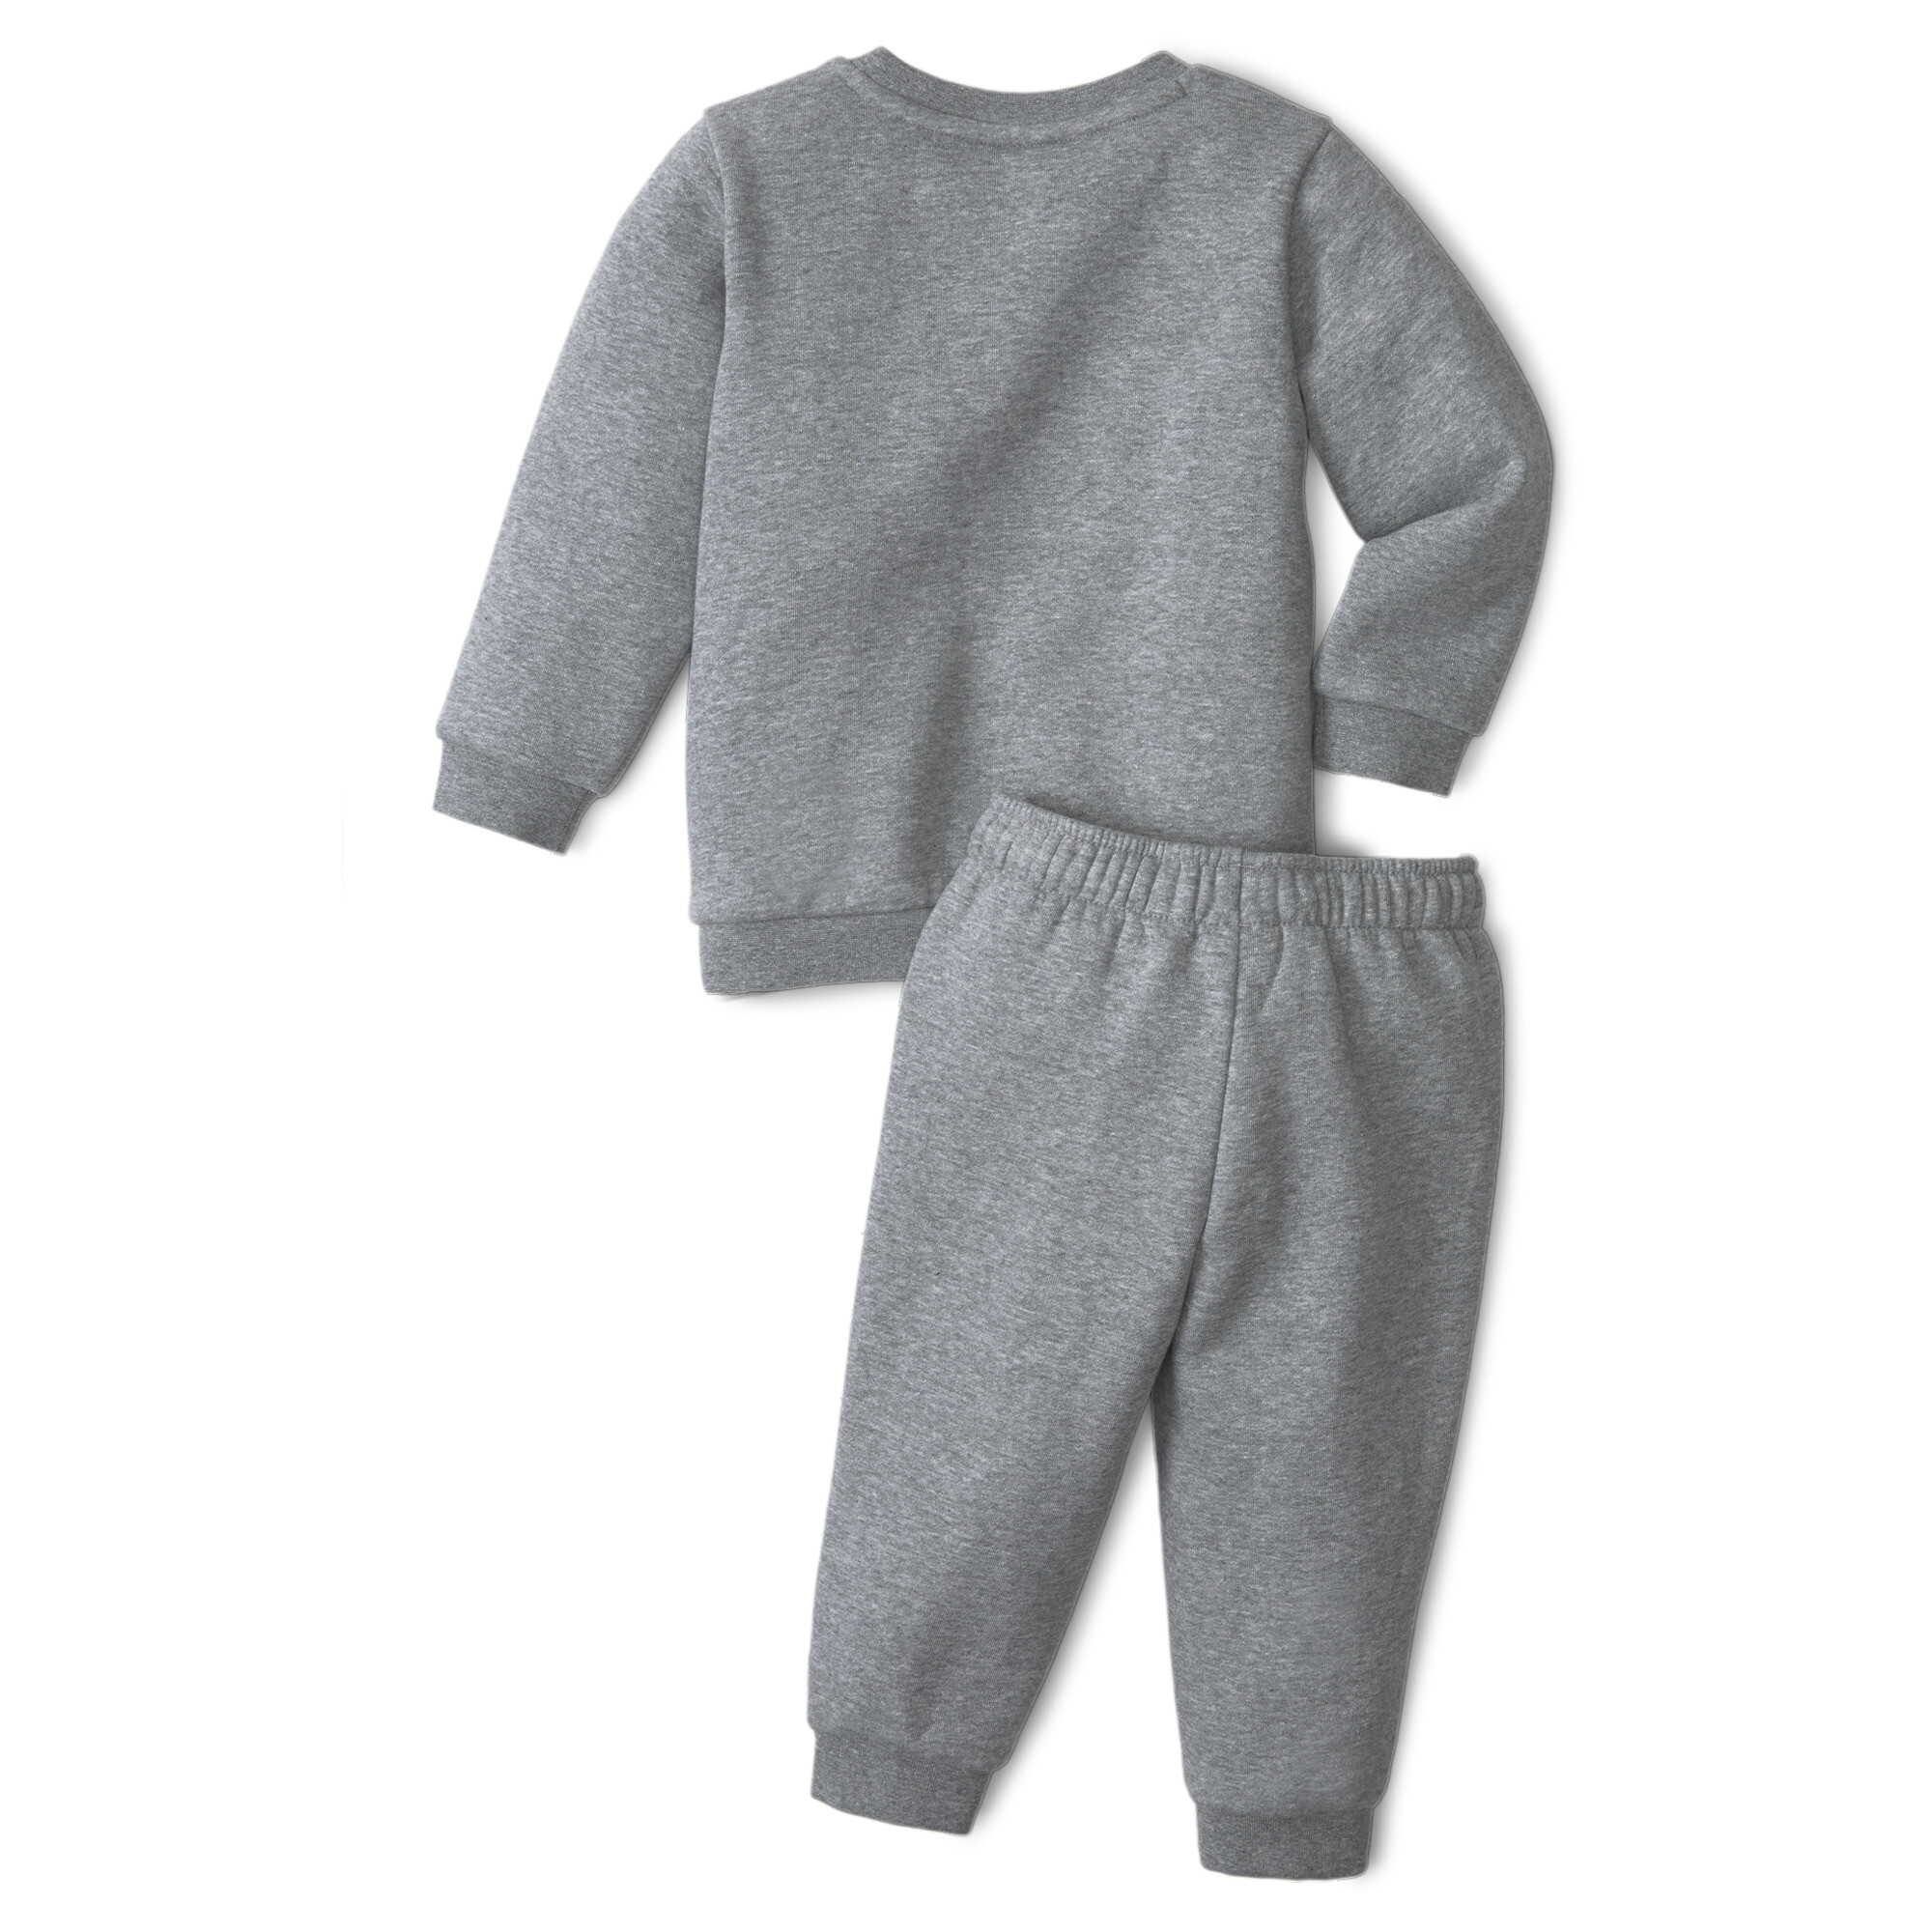 Puma Essentials Minicats Crew Neck Babies' Jogger Suit Sweatshirt, Gray Sweatshirt, Size 6-9M Sweatshirt, Clothing